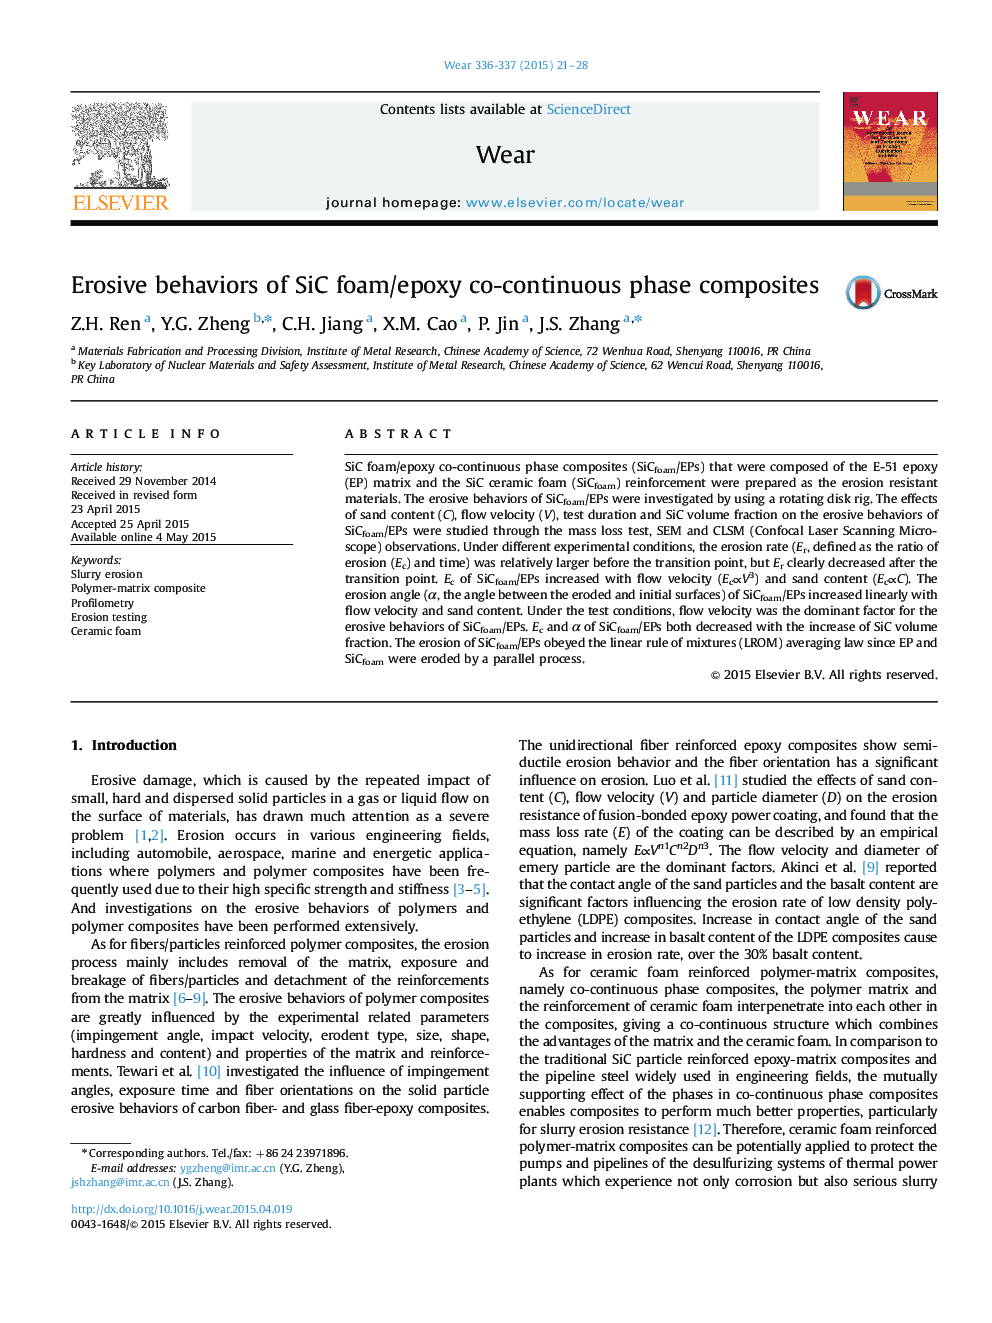 Erosive behaviors of SiC foam/epoxy co-continuous phase composites